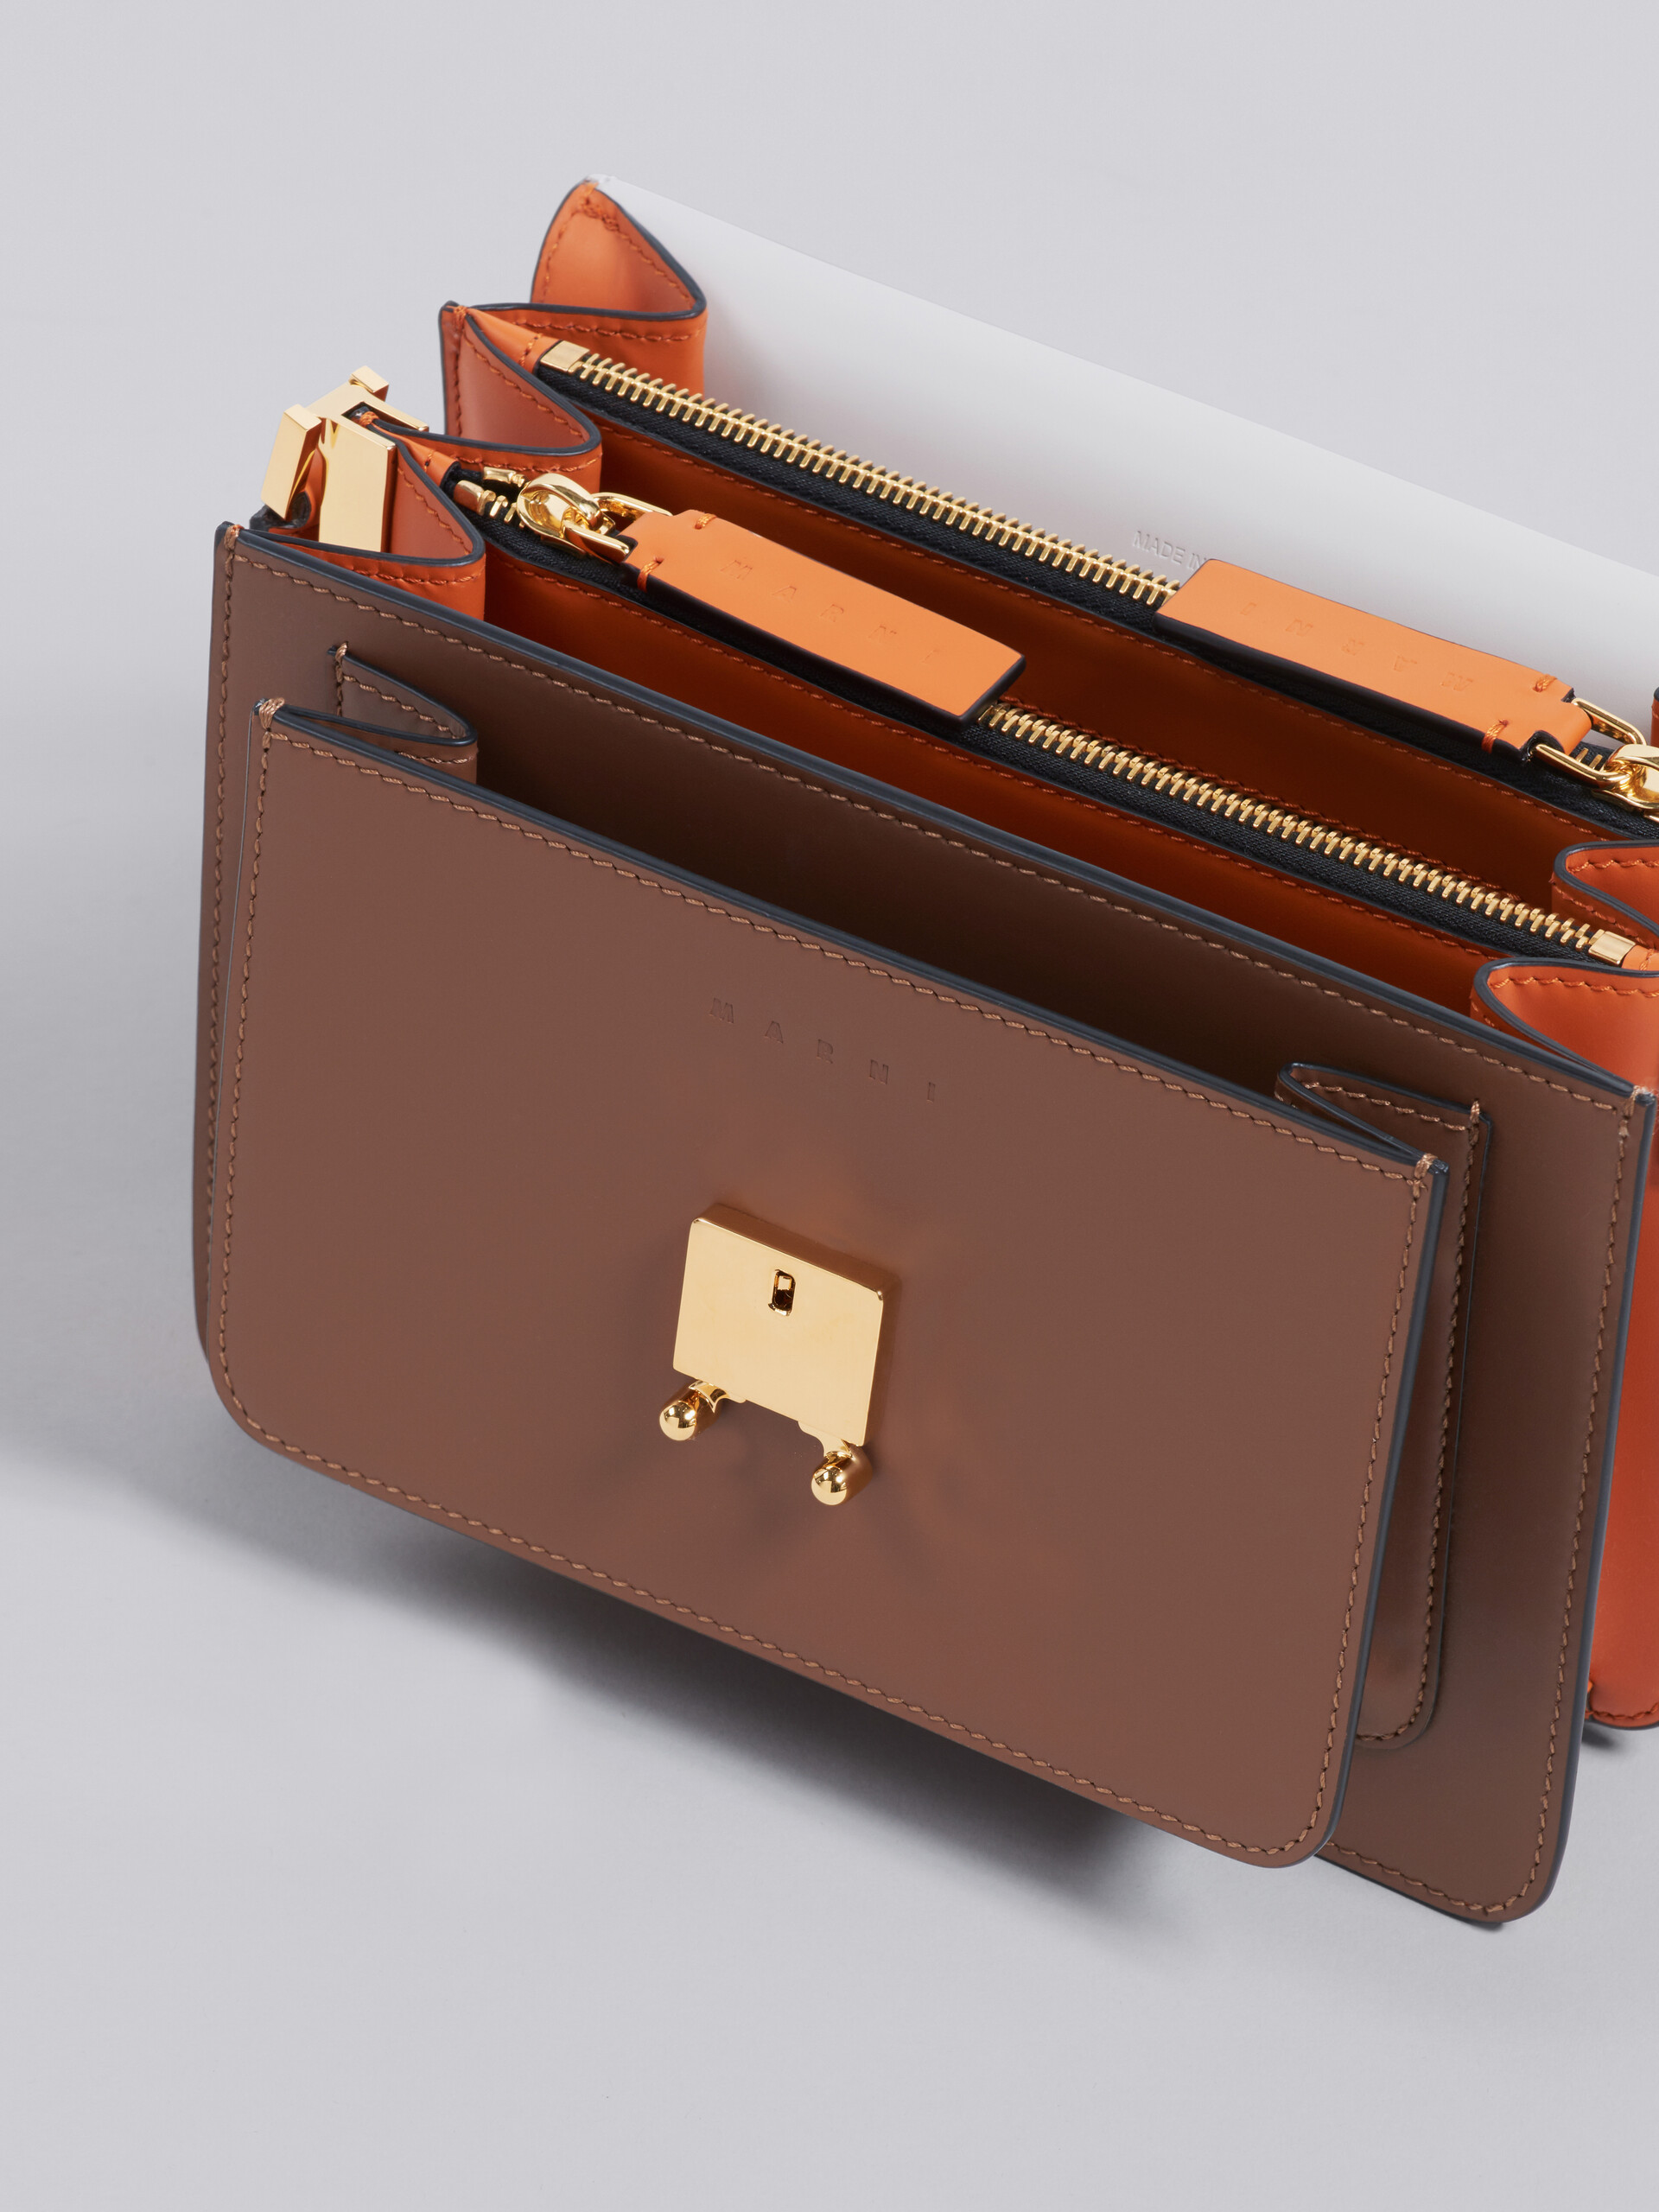 TRUNK medium bag in grey brown and orange leather - Shoulder Bags - Image 3